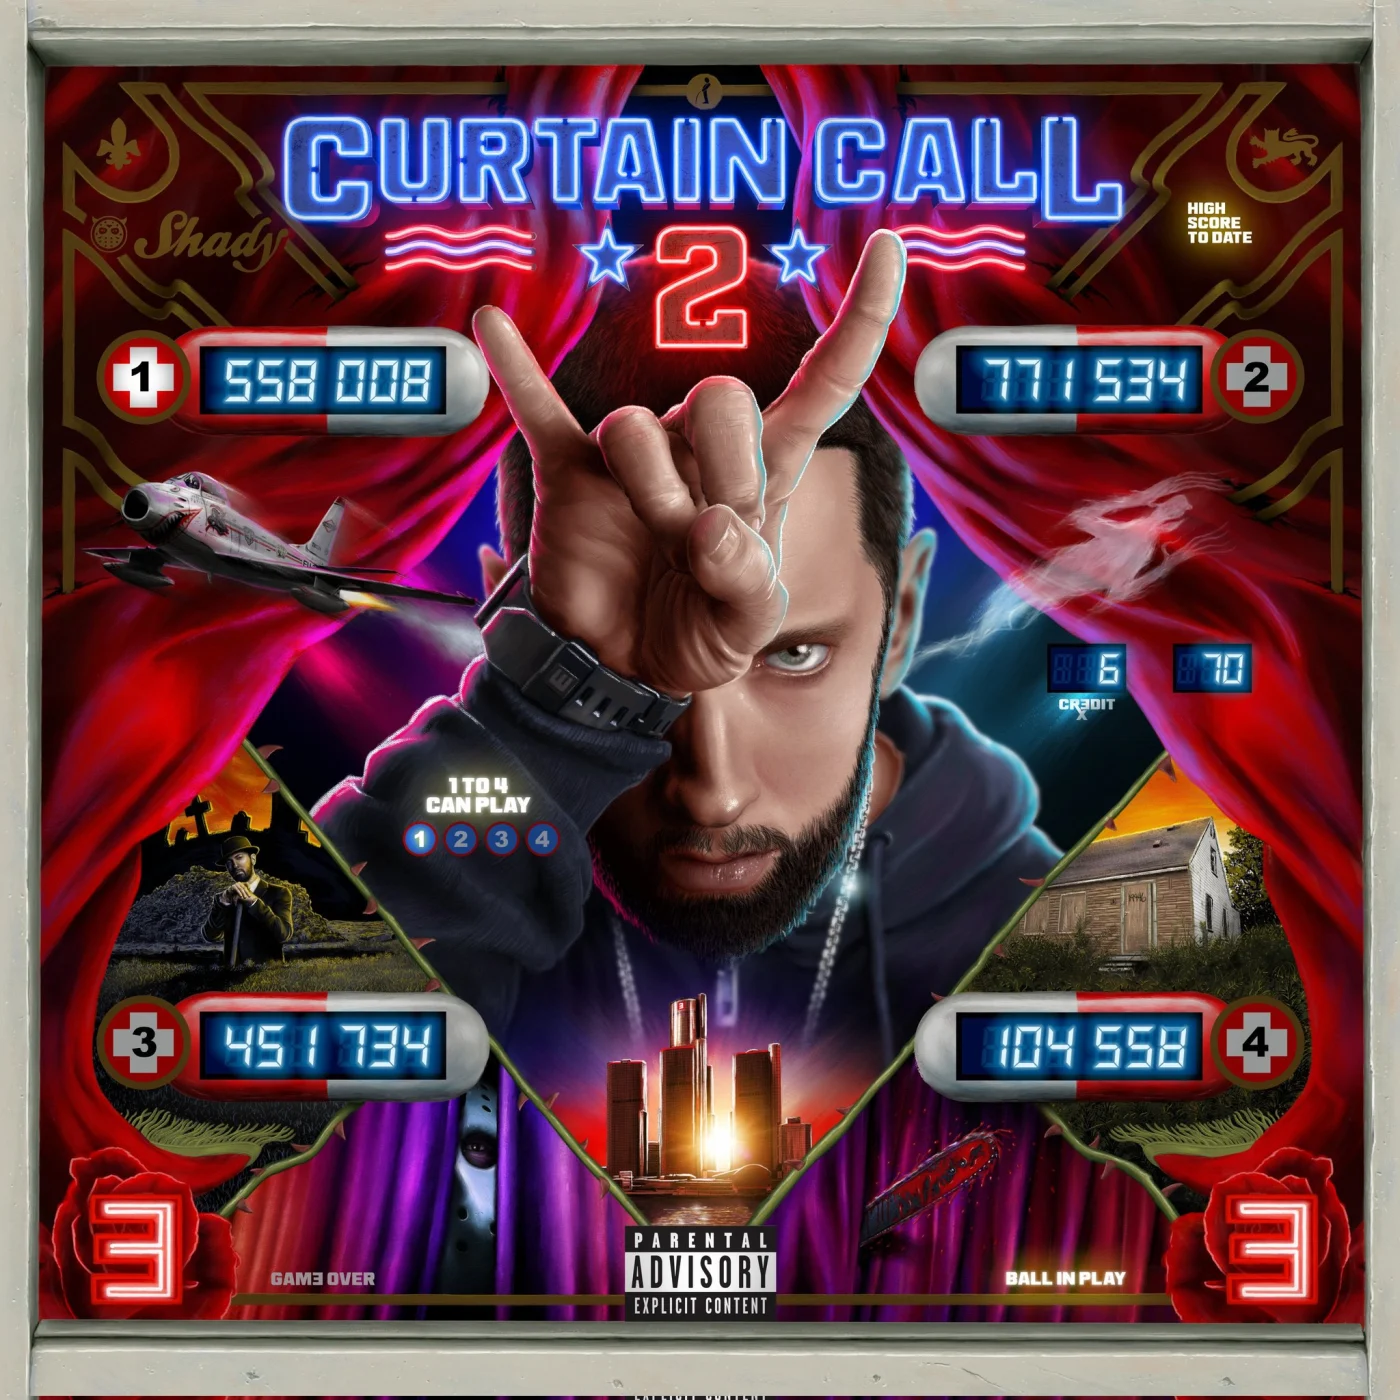 Is Eminem retiring? Curtain Call 2 cover art